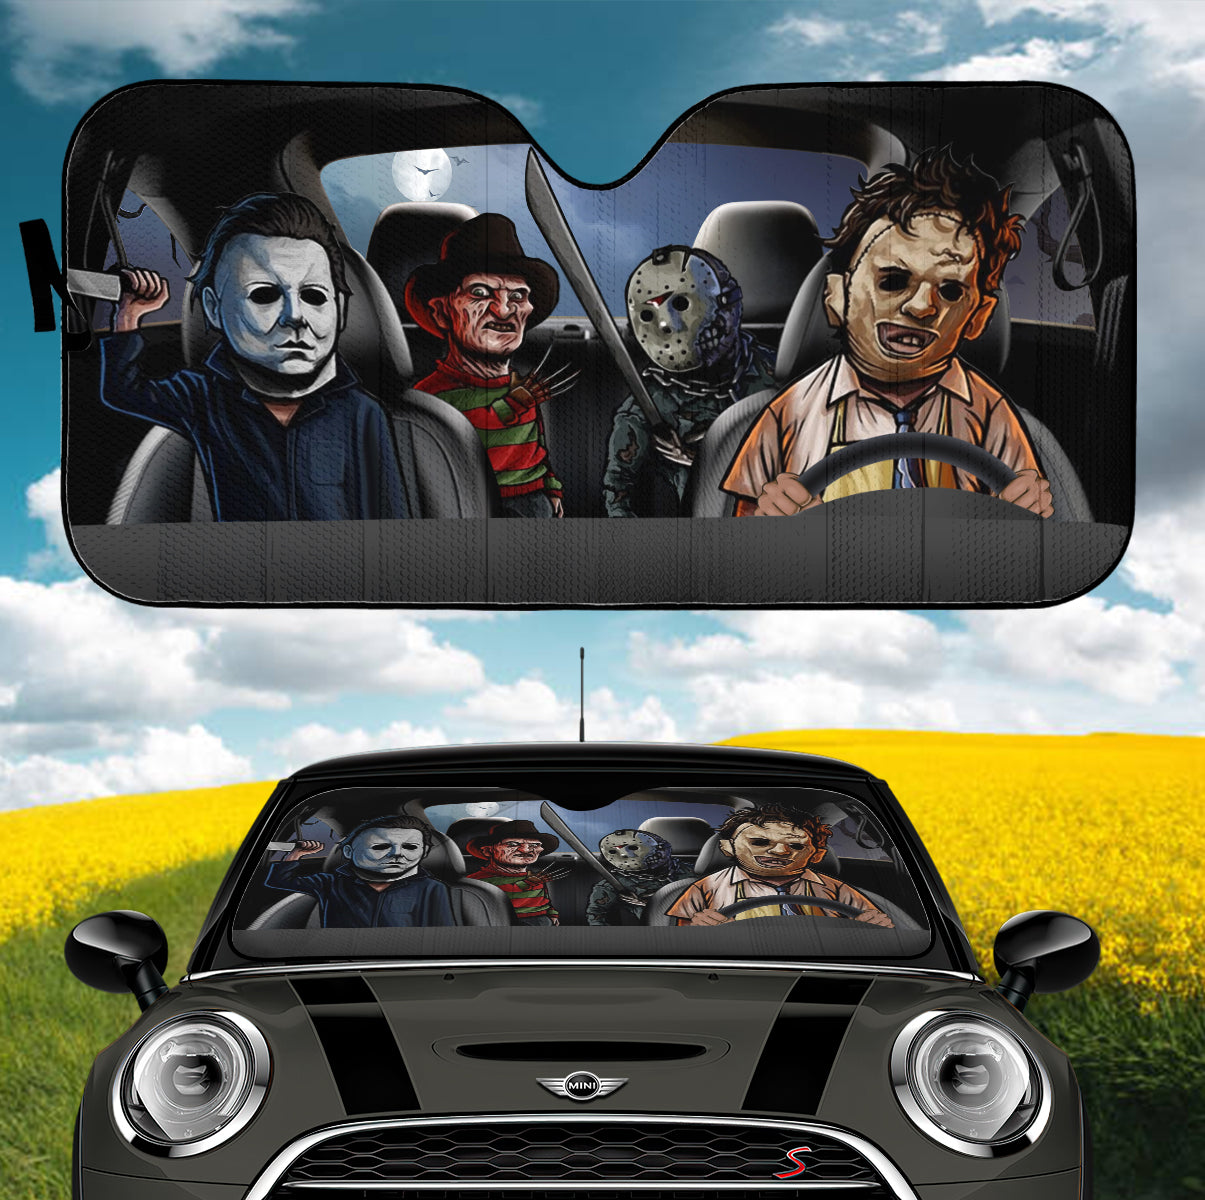 Halloween Horror Movies Driving Car Auto Sunshades Nearkii